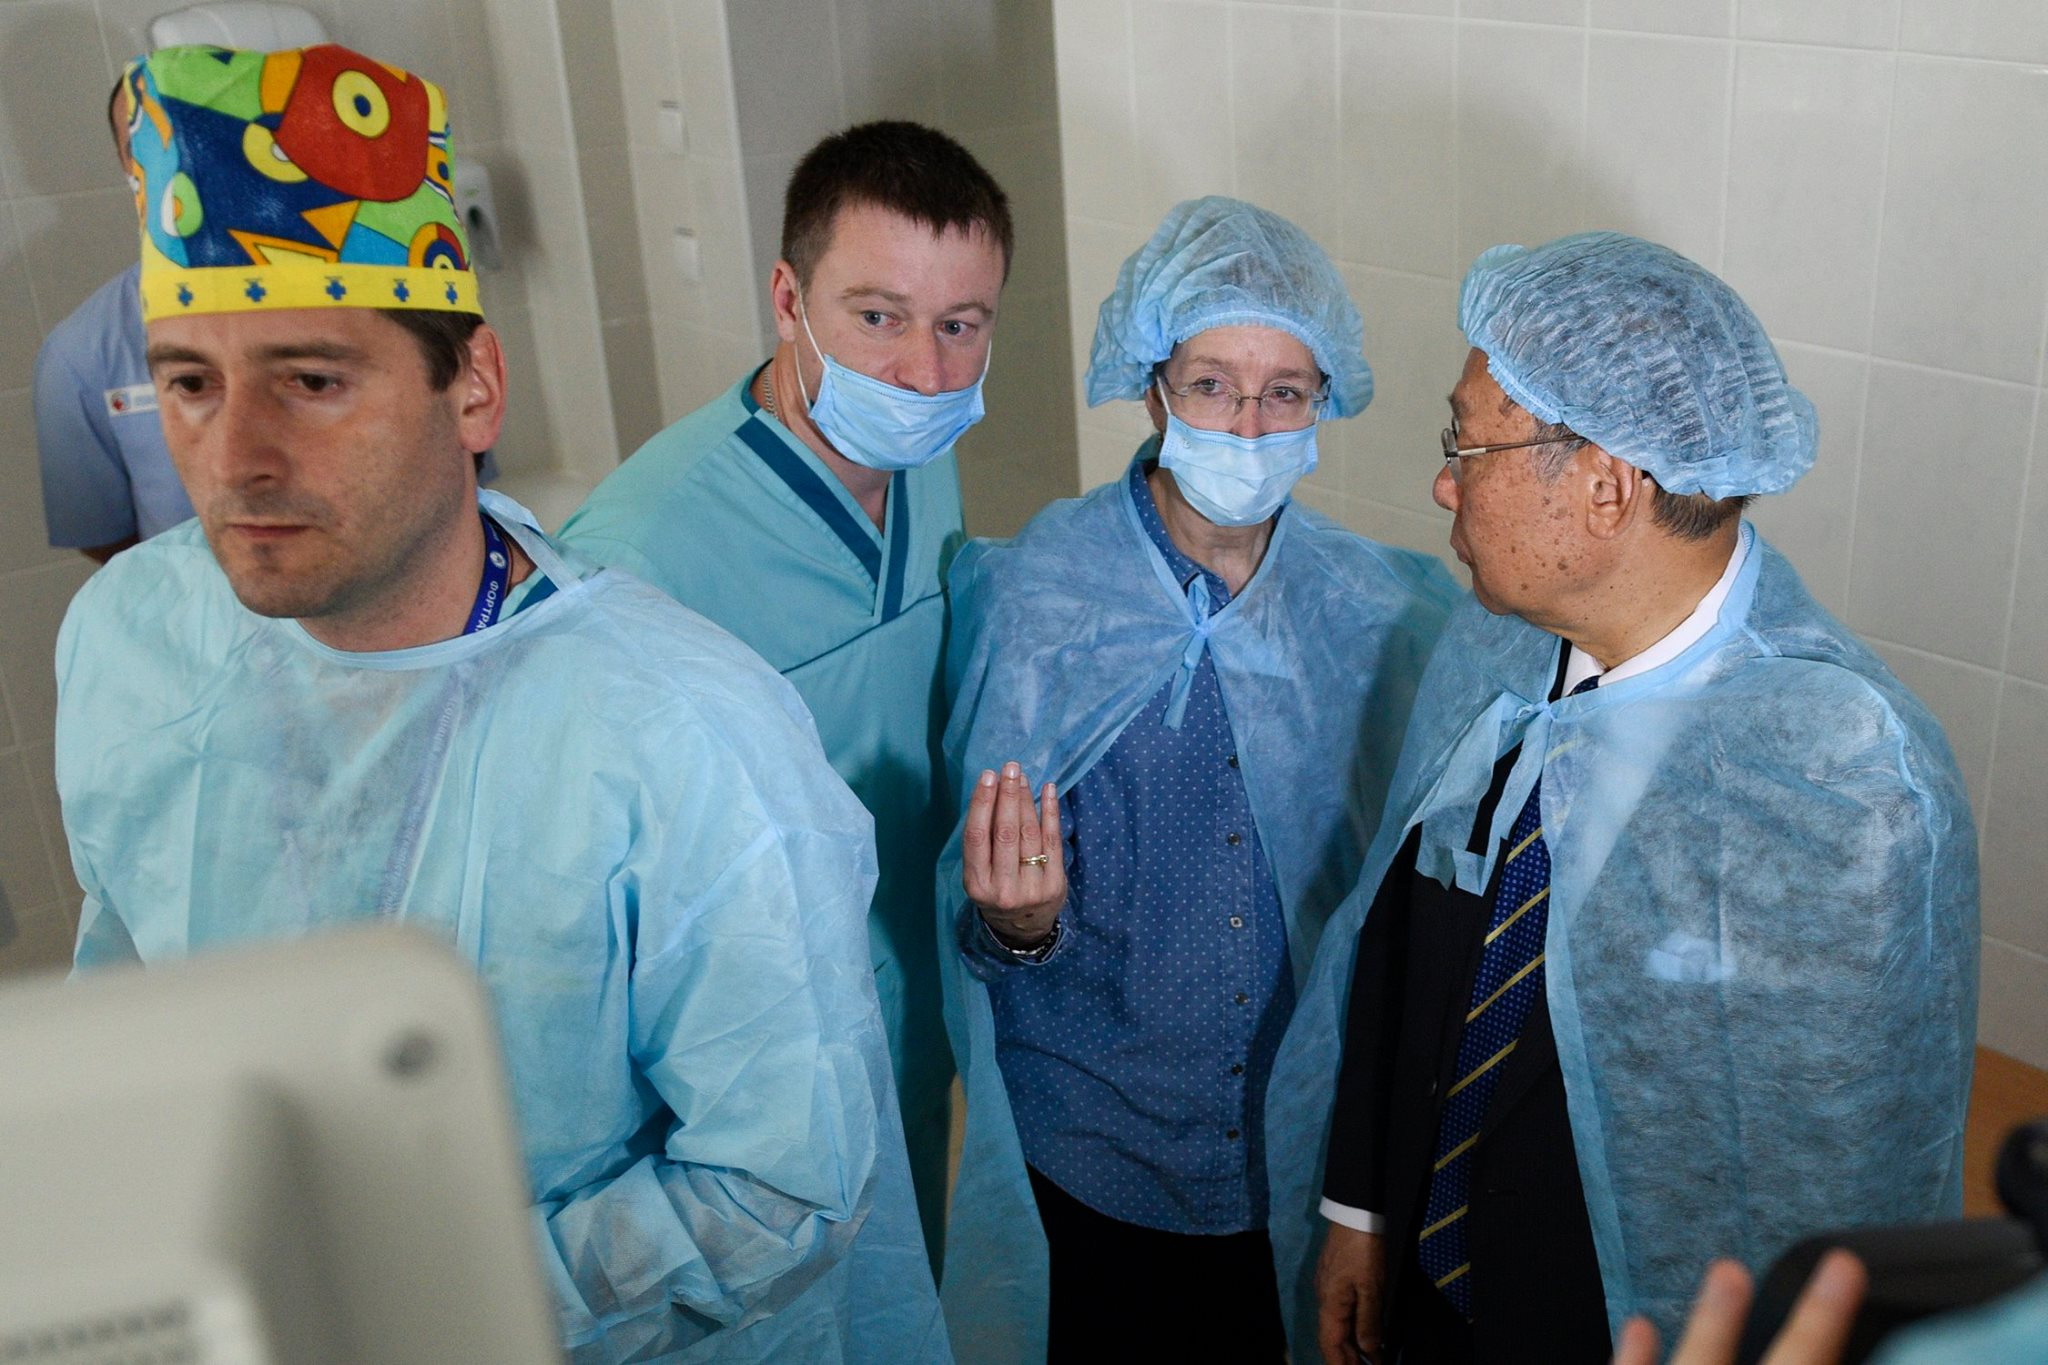 Ulyana Suprun and Japanese Ambassadori Sumi Shigeki visited Kiev region hospital